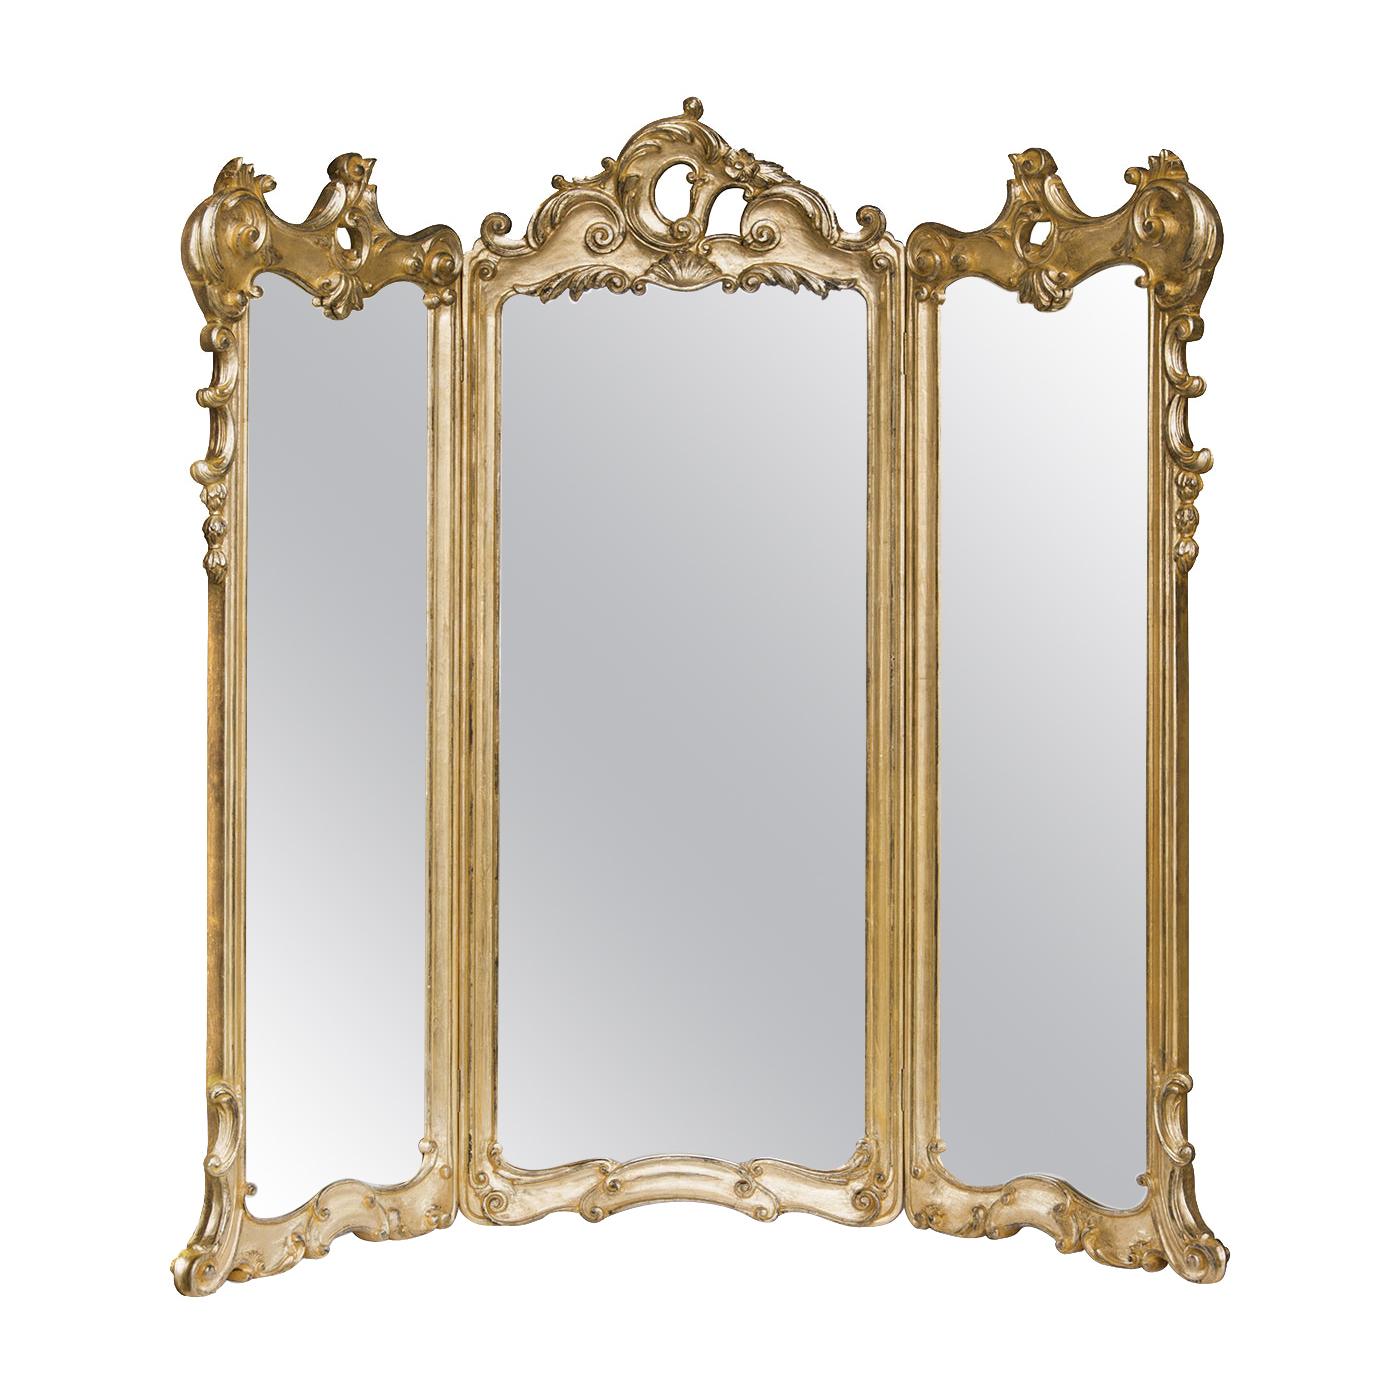 Three-Part Mirror with Gold Leaf